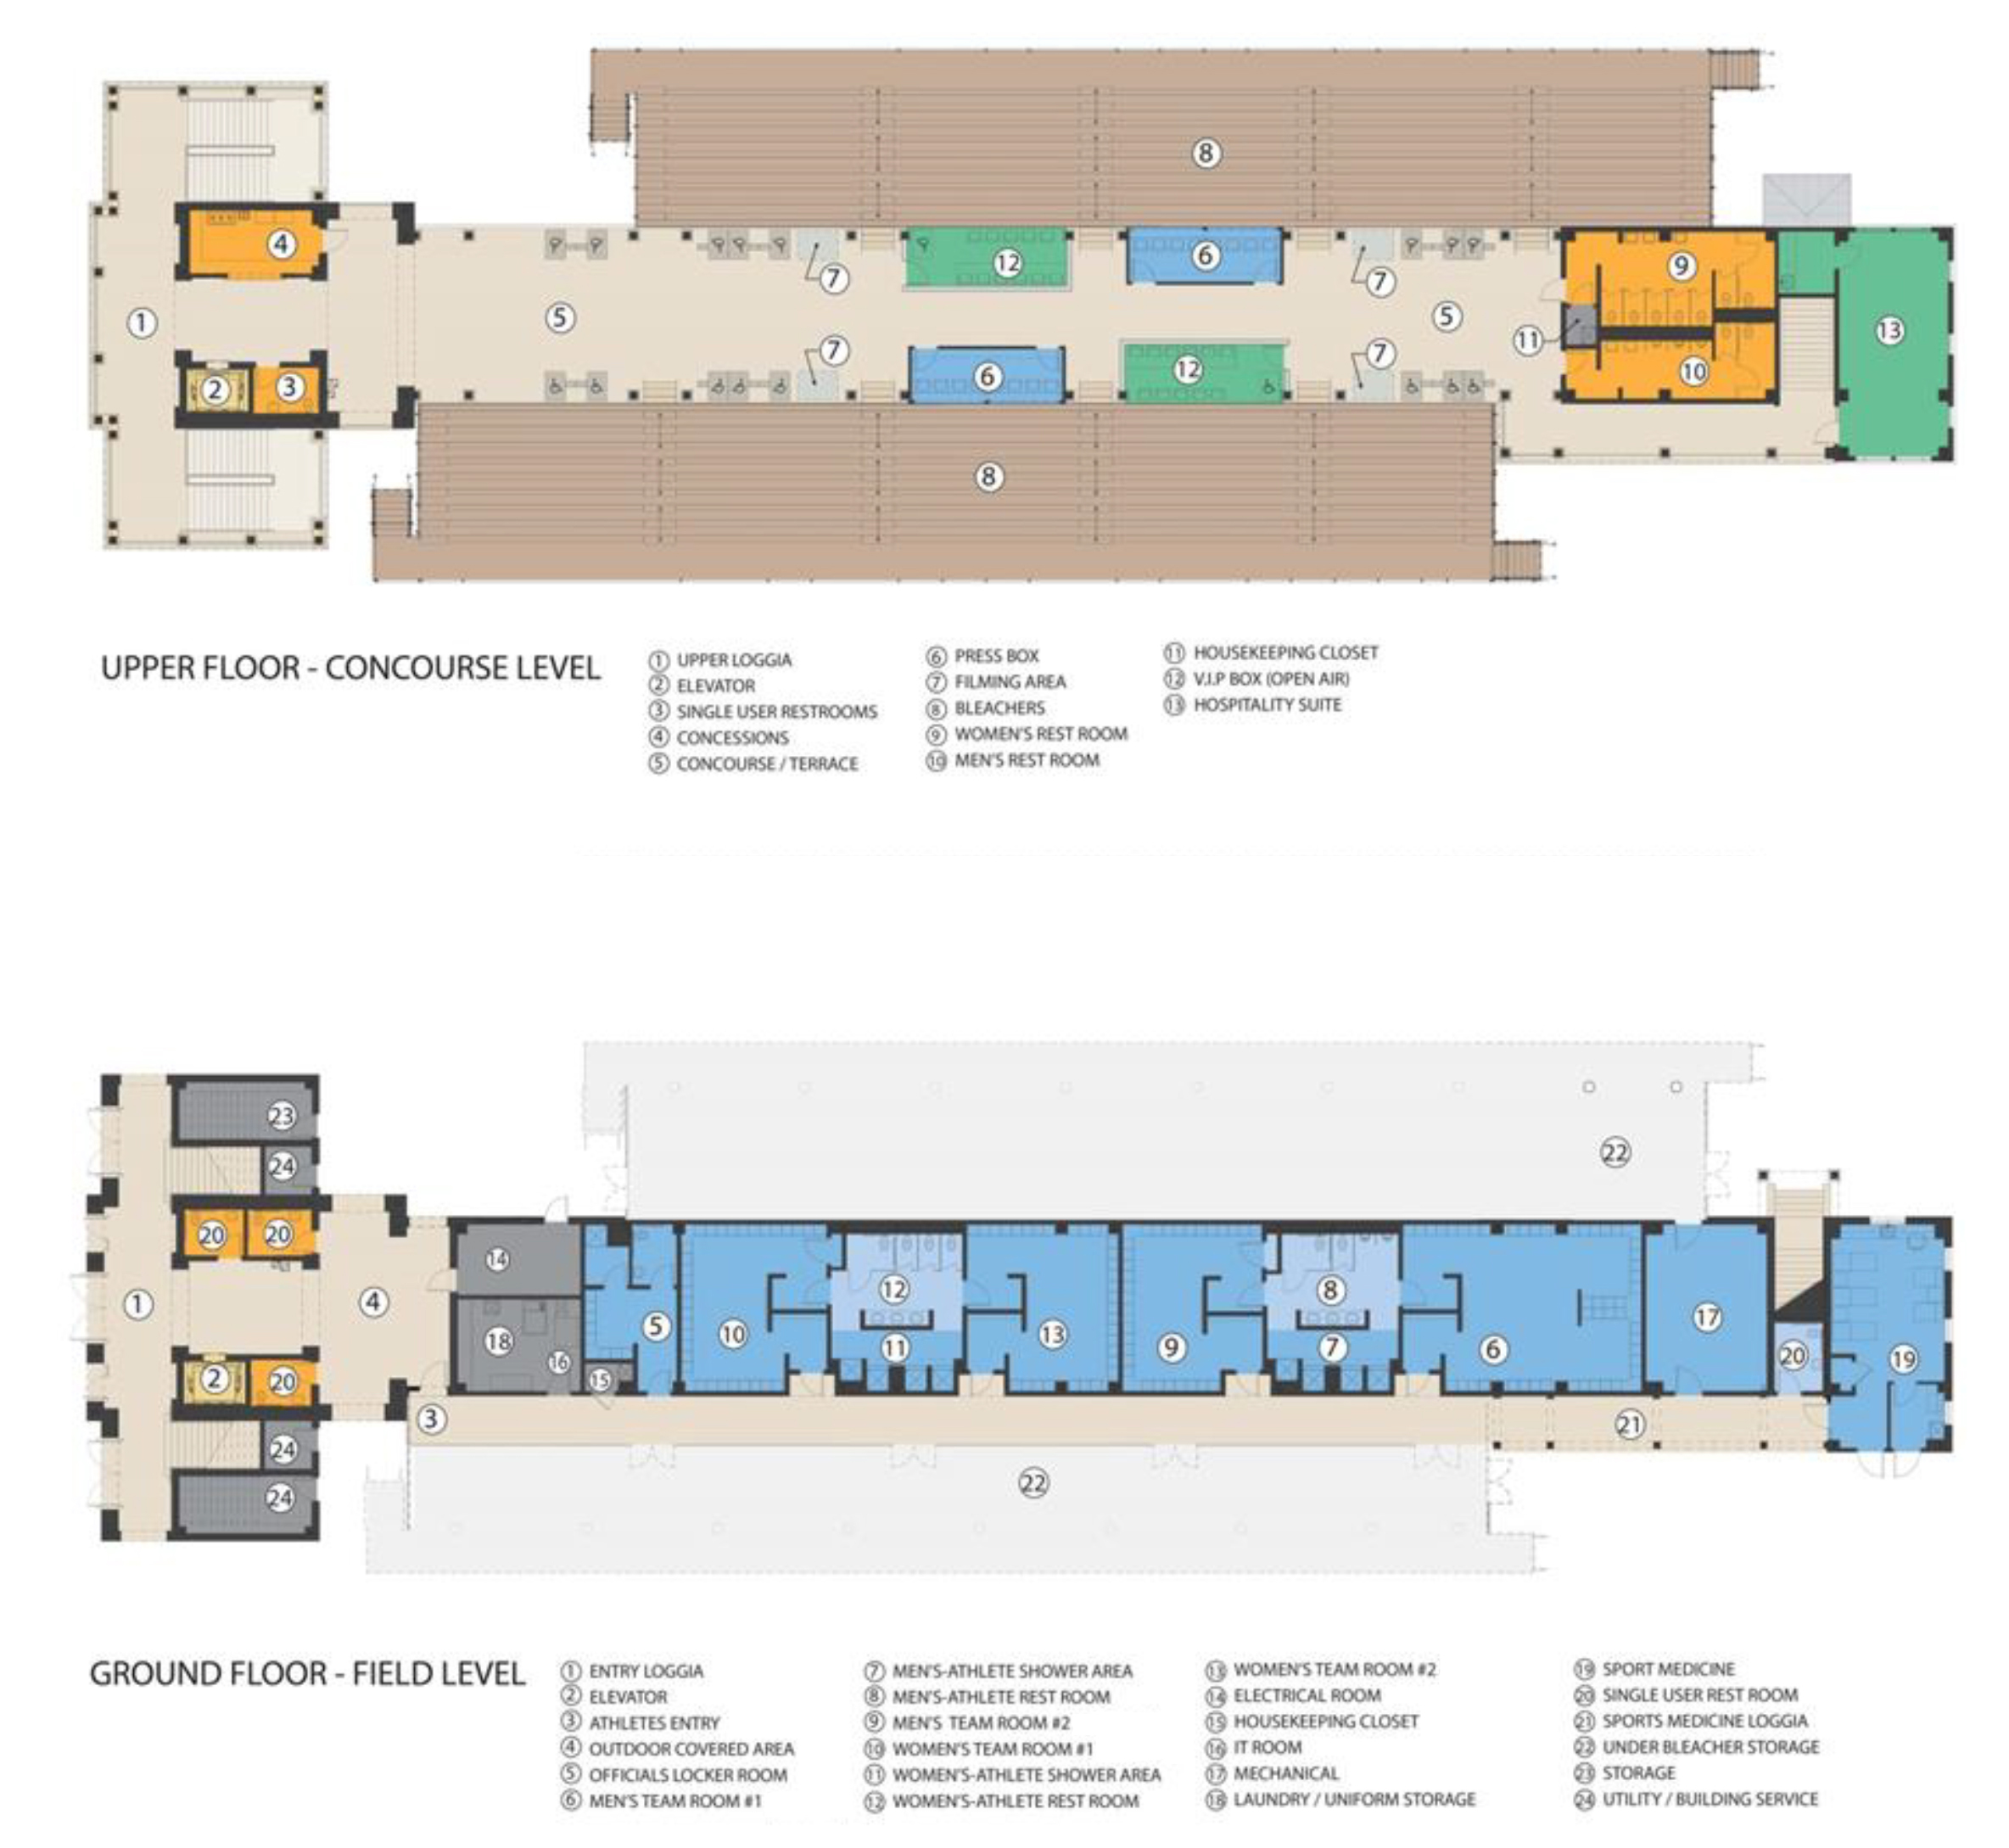 The Upper Floor Concourse Level and Ground Floor Field Level floor plans of the Jamie L Roberts Stadium